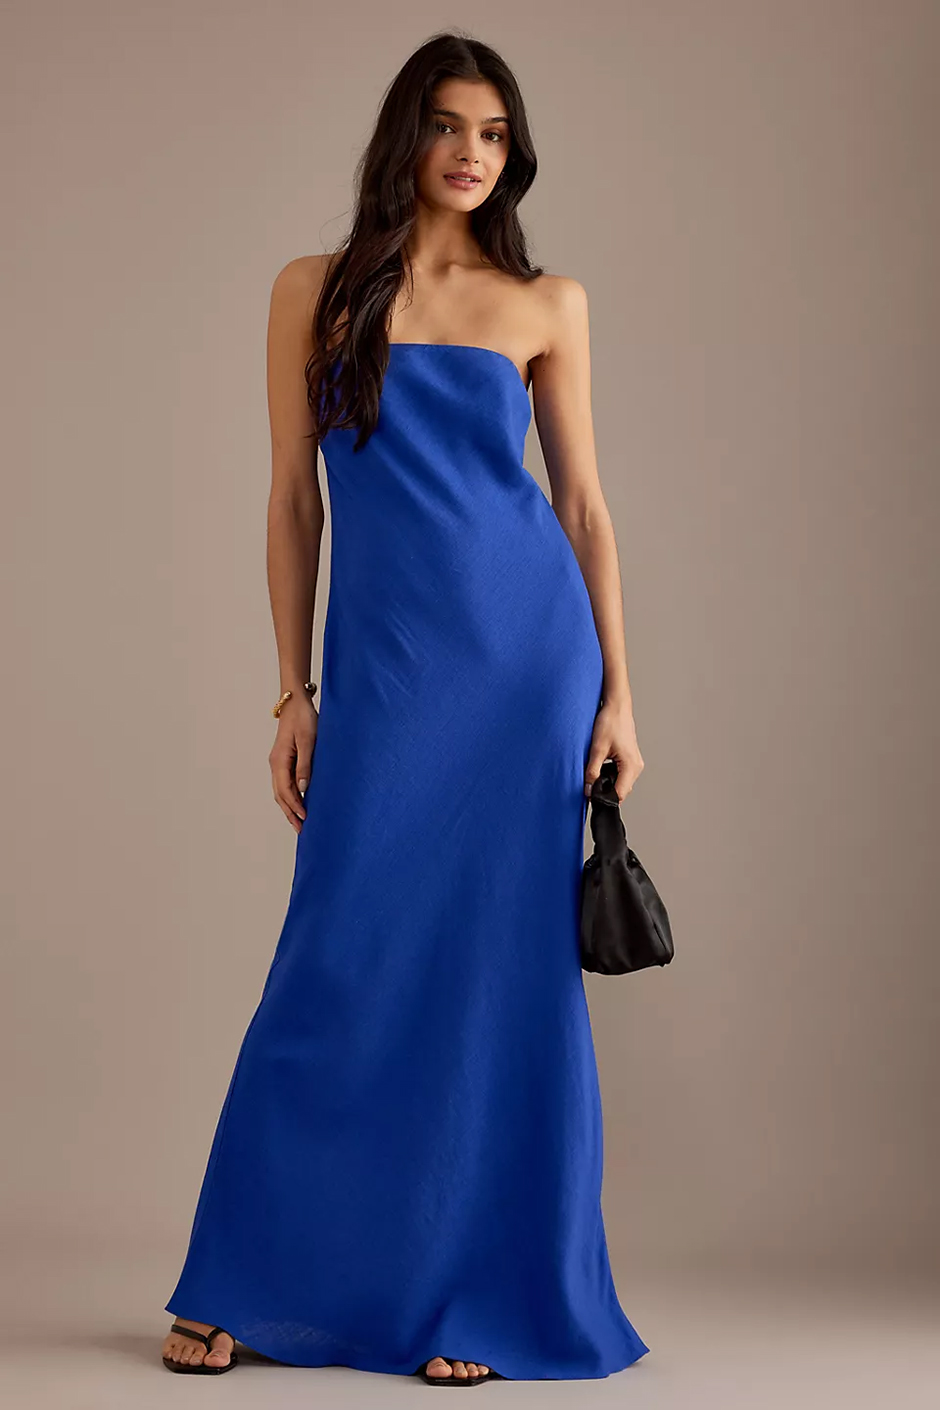 Spring bridesmaid dress from Anthropologie - linen-blend bold blue strapless maxi dress